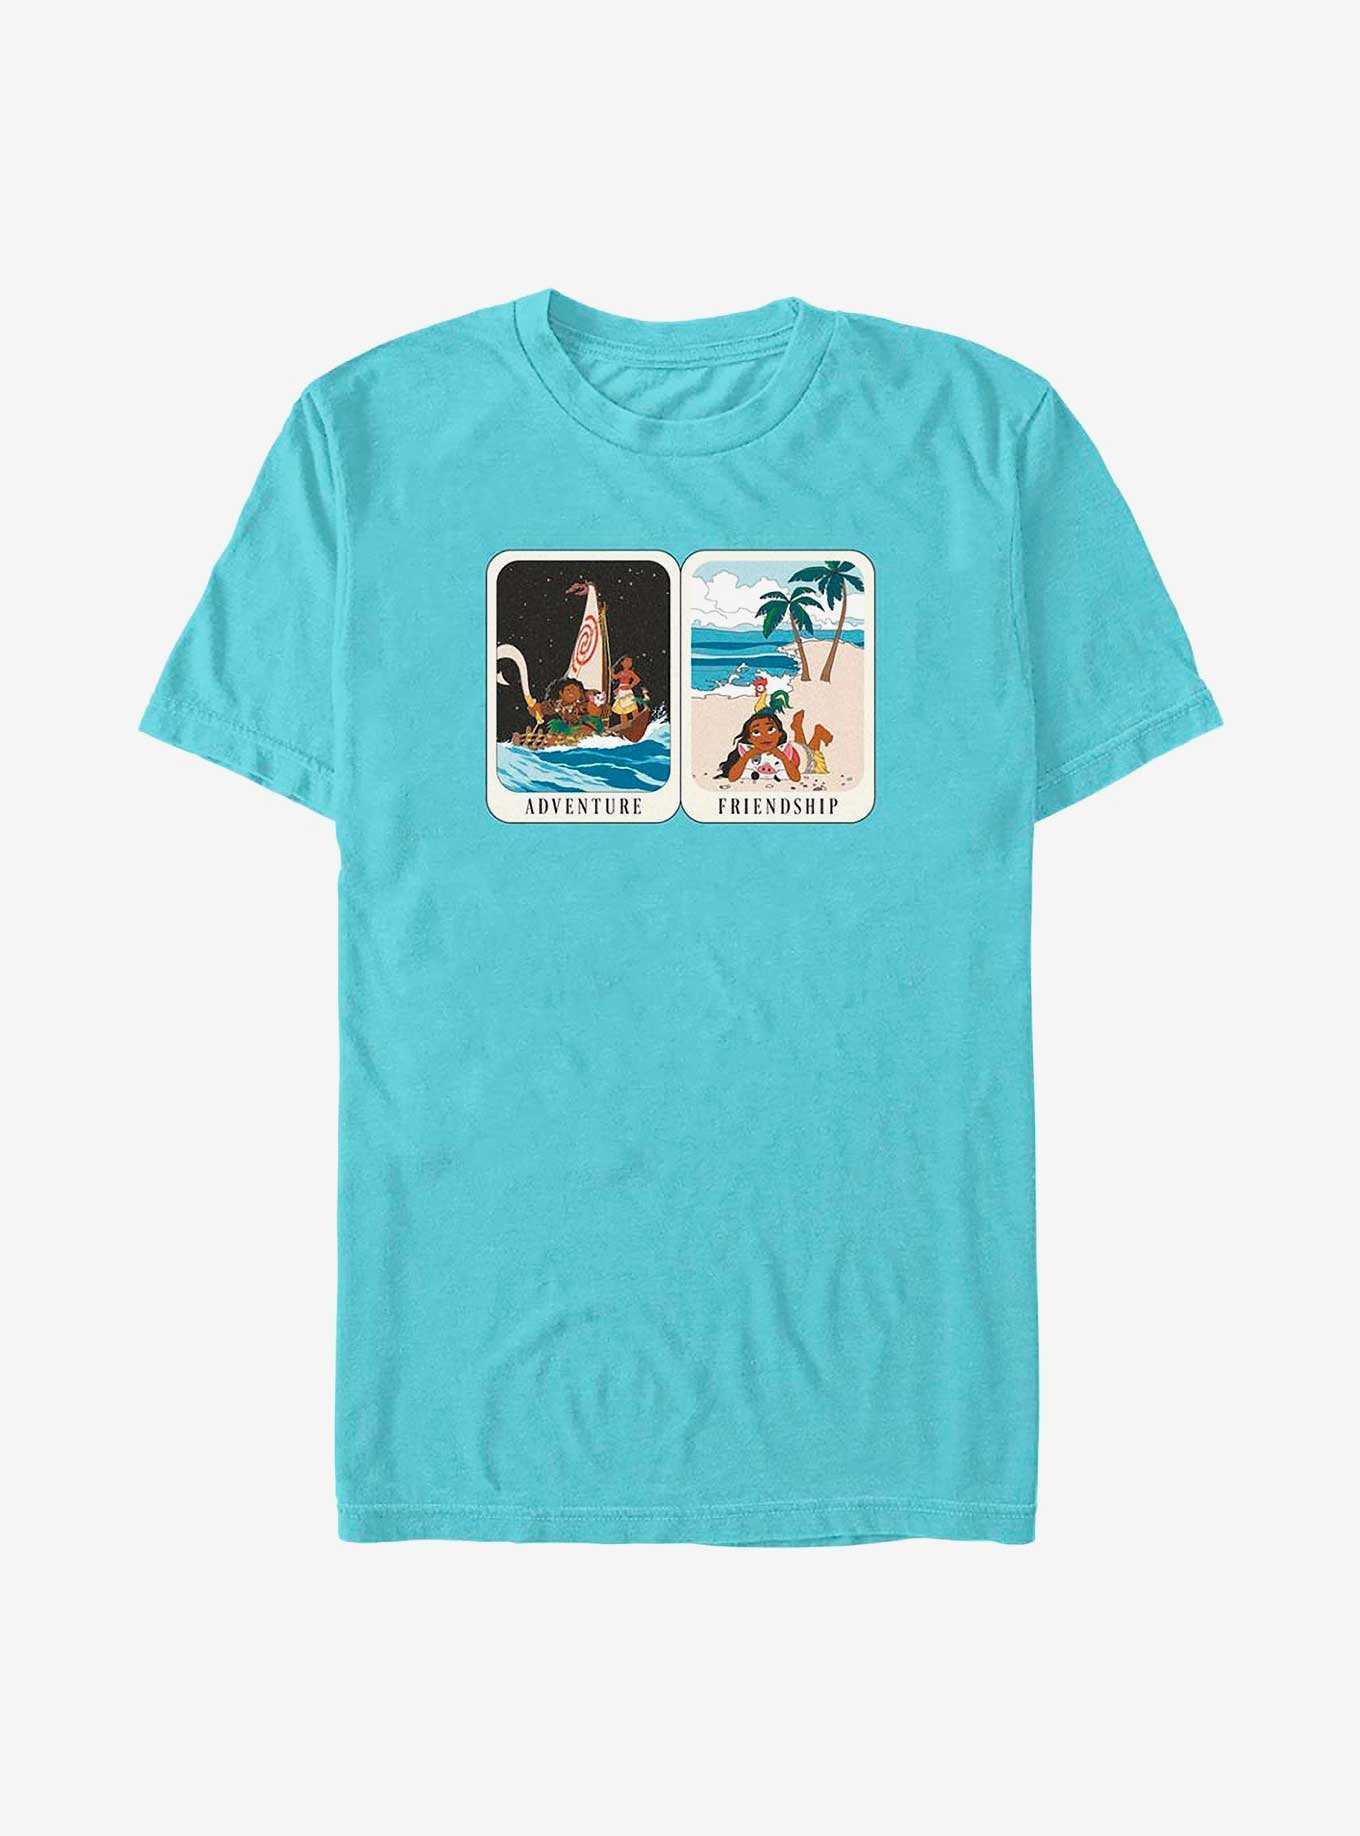 Disney Moana Adventure and Friendship Cards T-Shirt, , hi-res